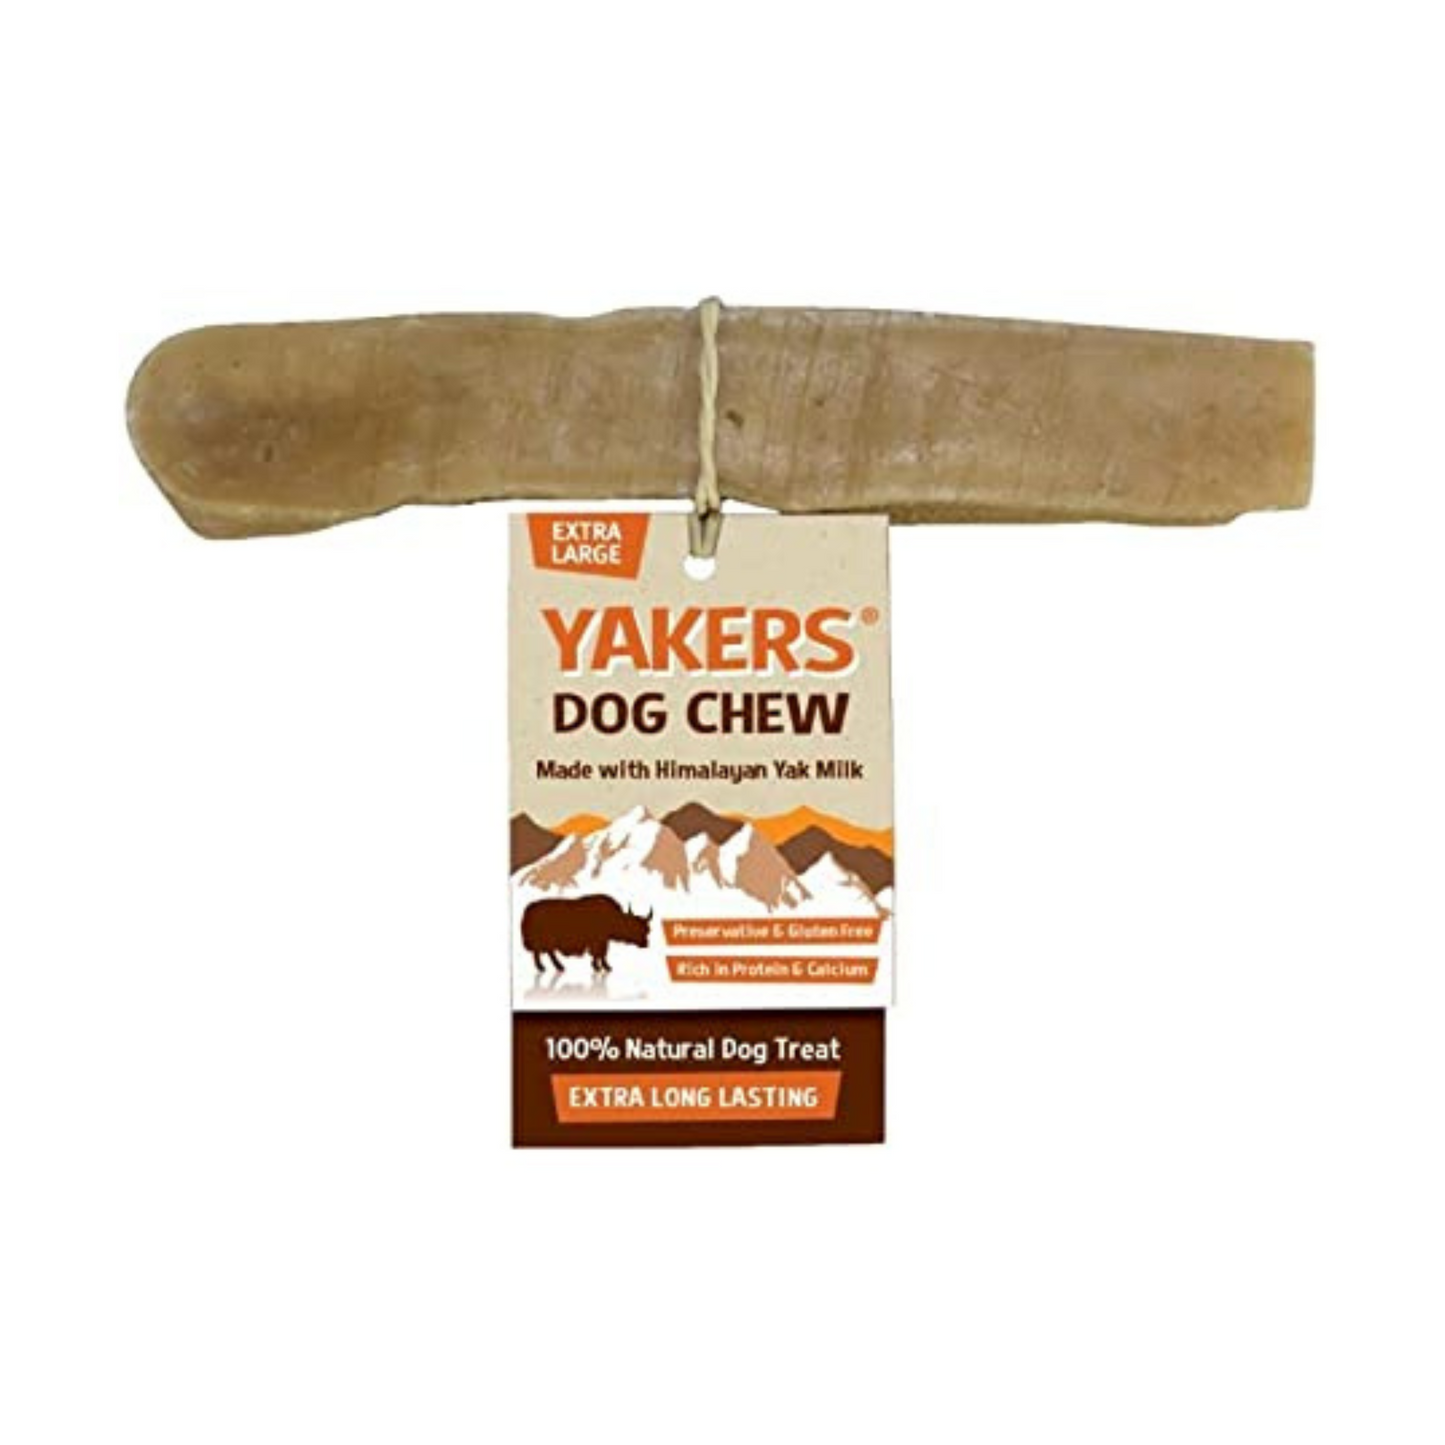 Yakers Original Dog Chew Medium 70g & Extra Large 140g